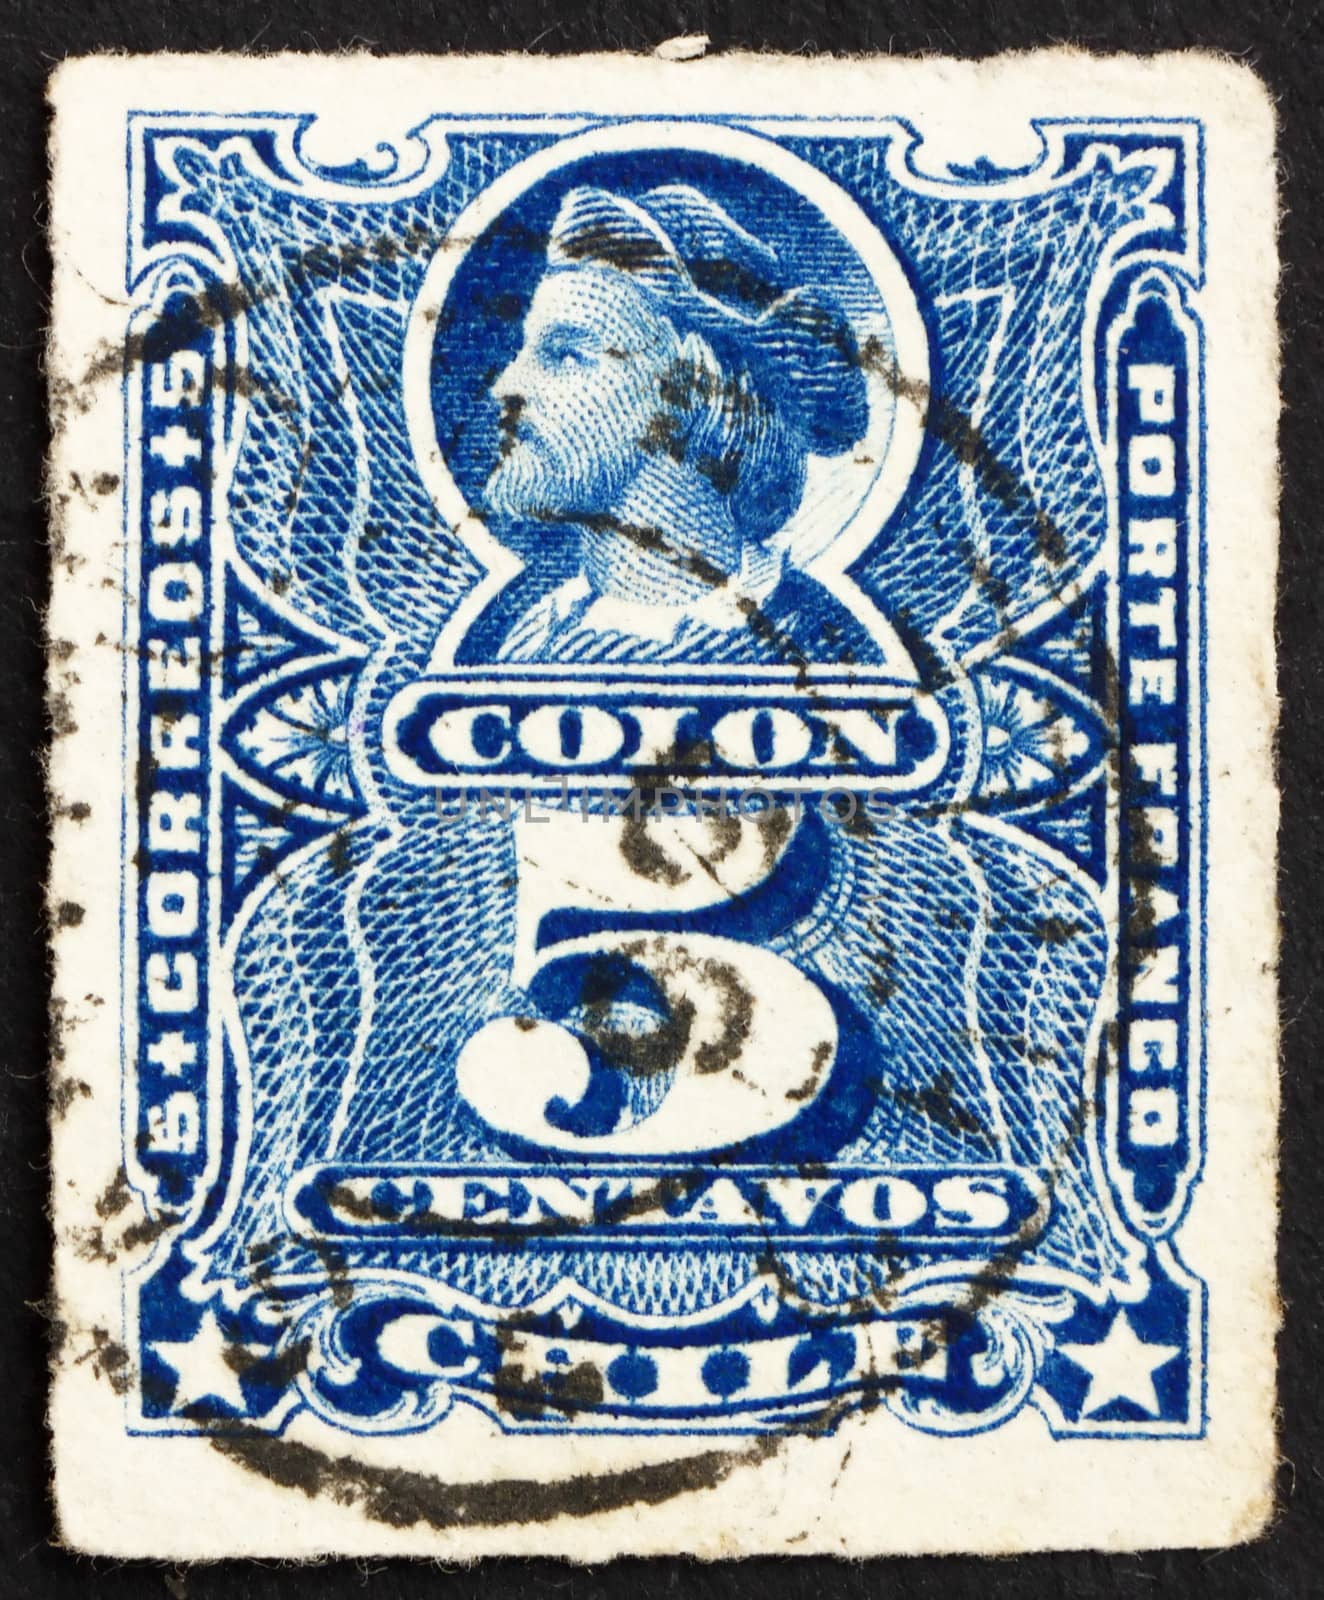 CHILE - CIRCA 1883: a stamp printed in the Chile shows Christopher Columbus, Cristobal Colon, Explorer, Colonizer, Navigator, circa 1883